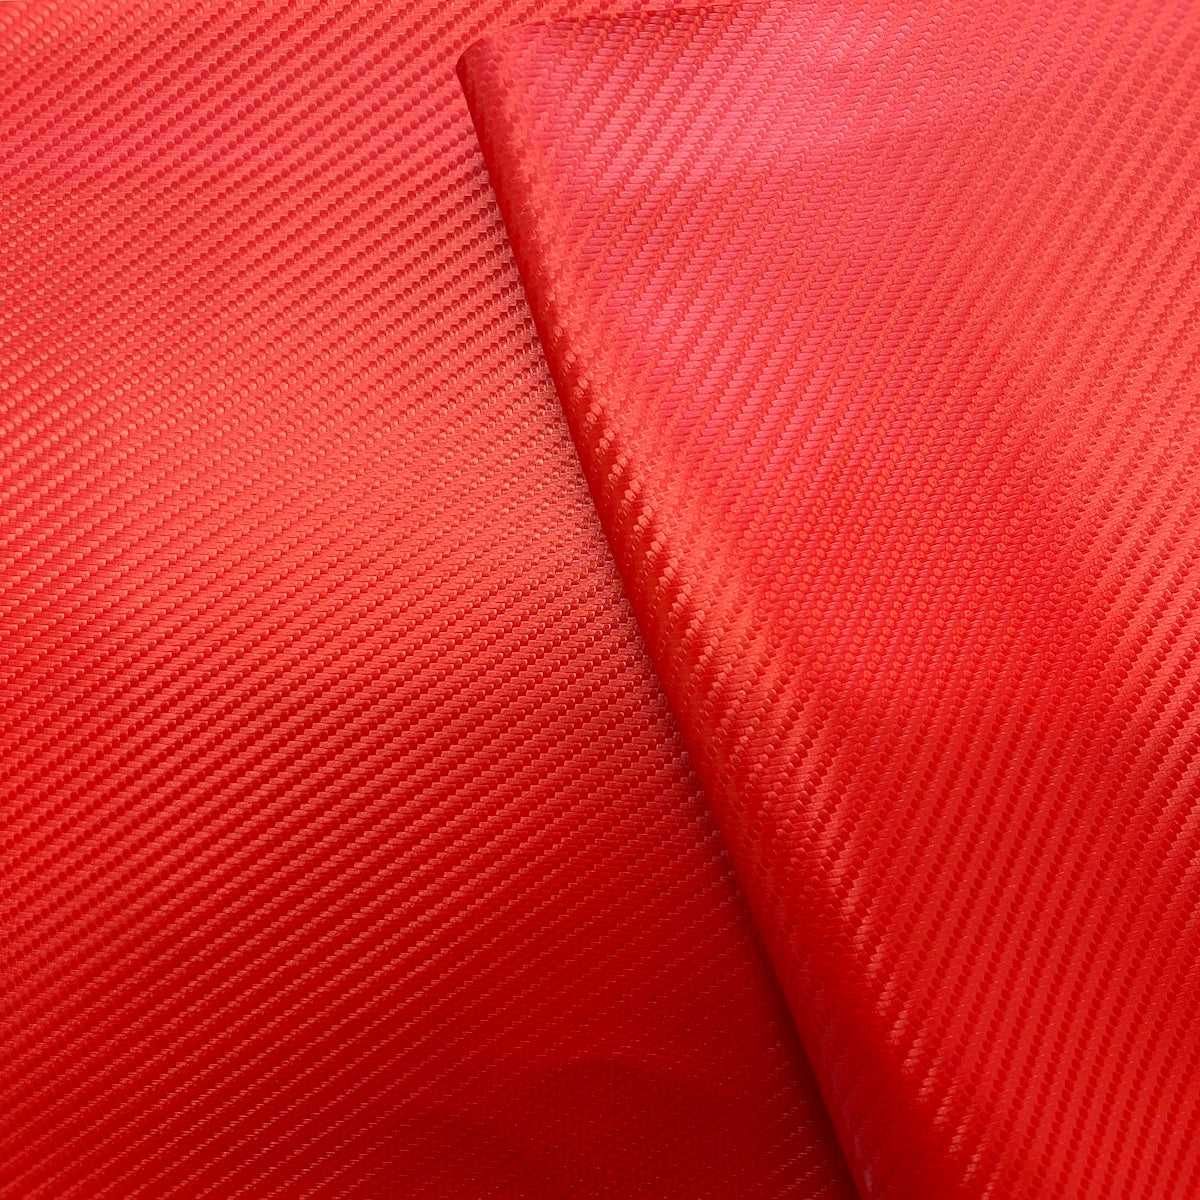 Red Carbon Fiber Marine Vinyl Fabric - Fashion Fabrics LLC